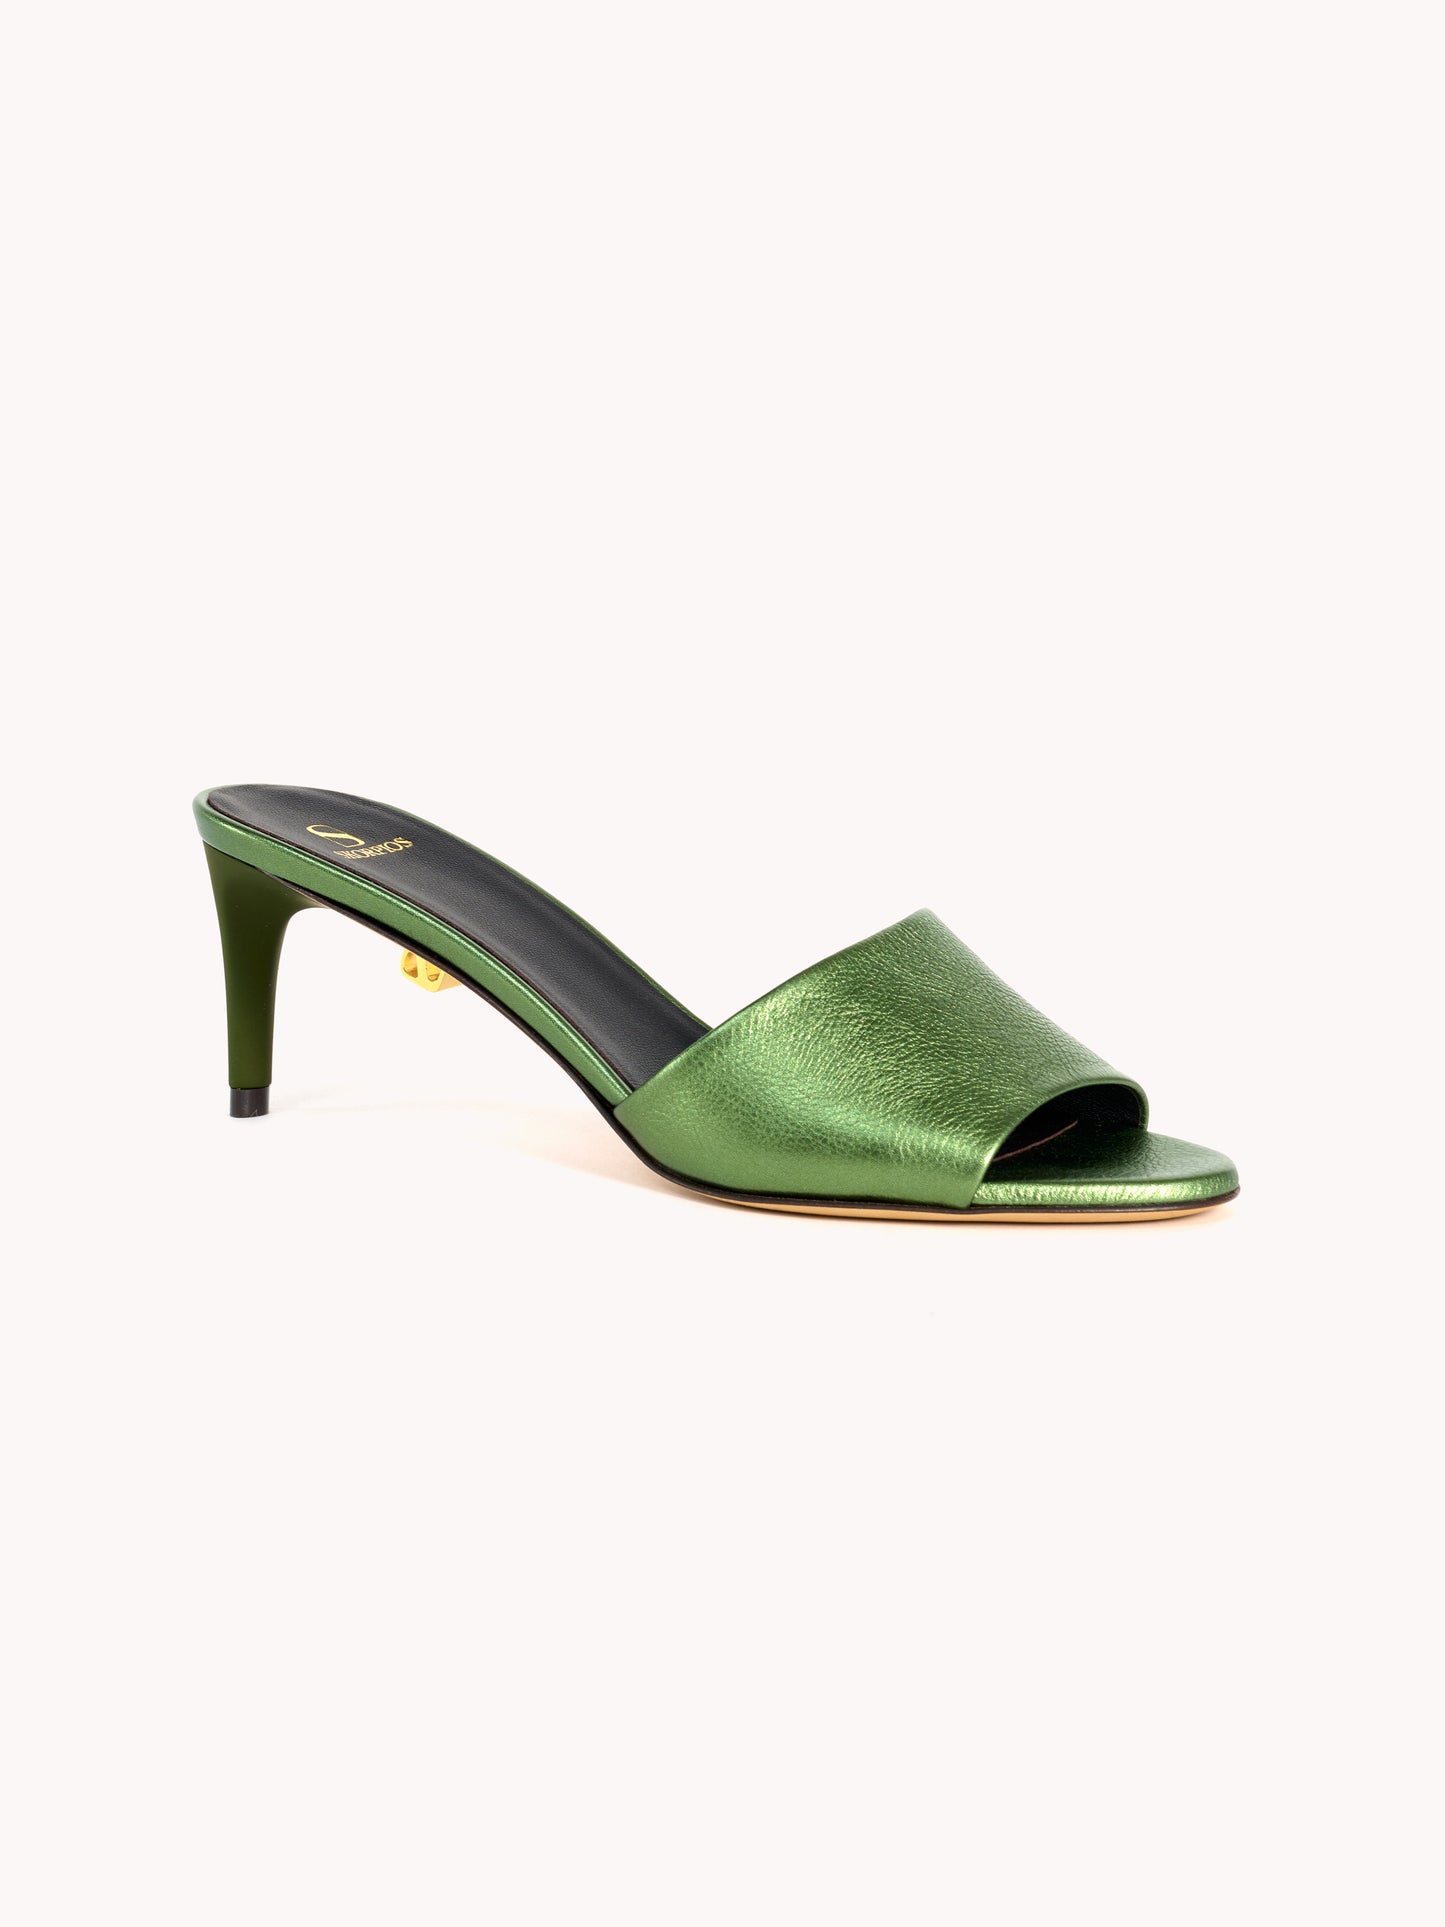 effortless chic mules metallic green leather mid-heel stiletto skorpios 